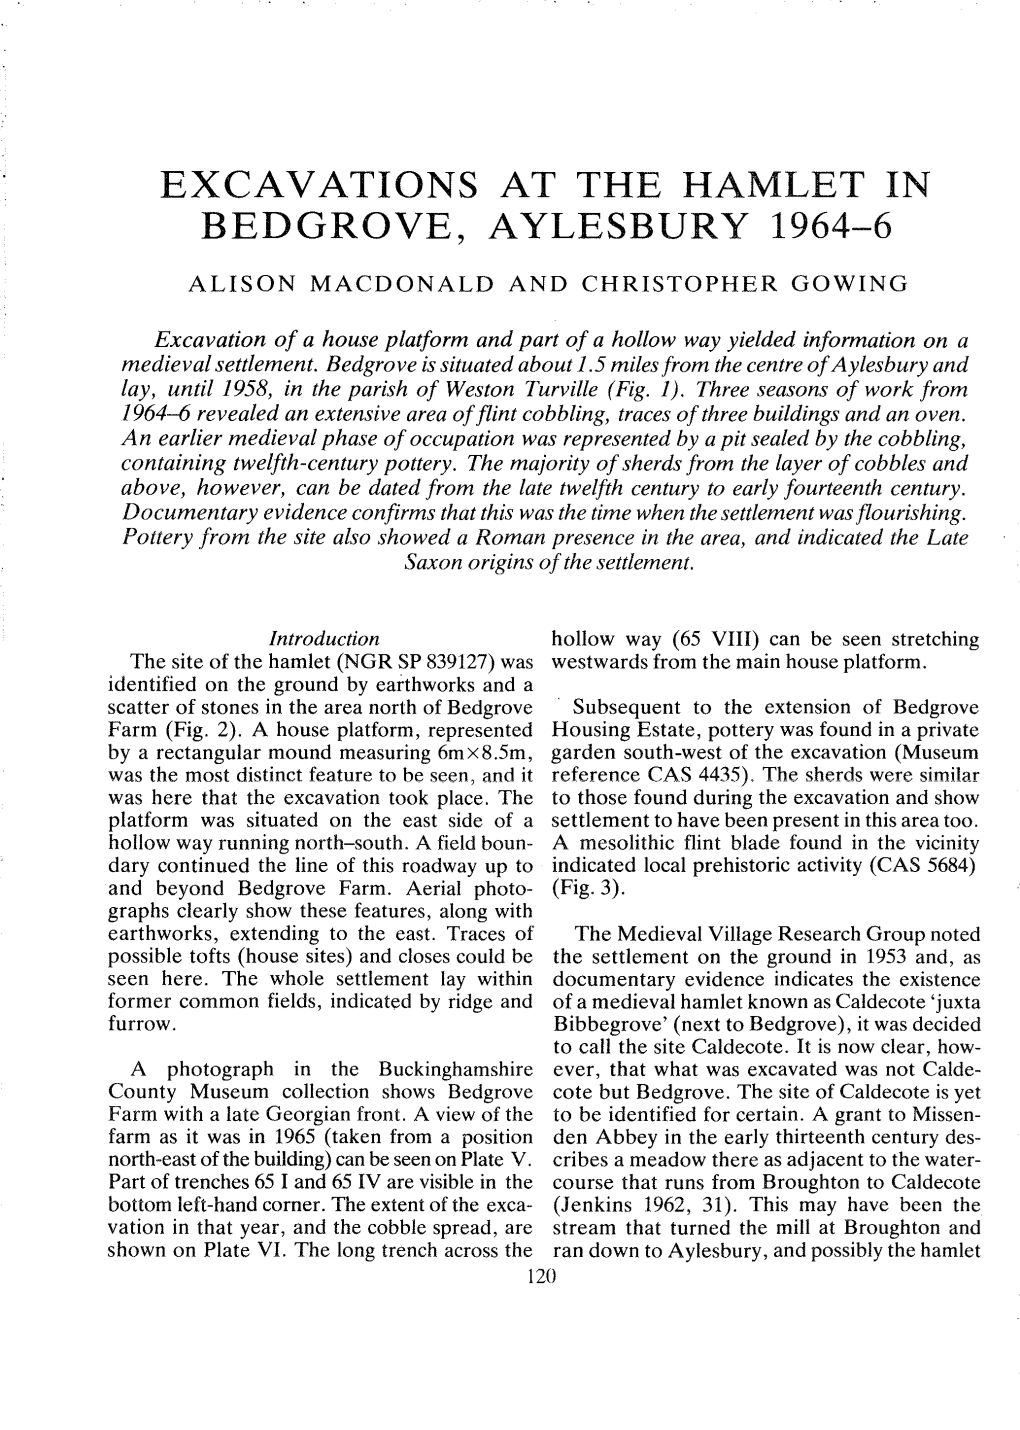 Excavations at the Hamlet in Bedgrove, Aylesbury, 1964-66. Alison